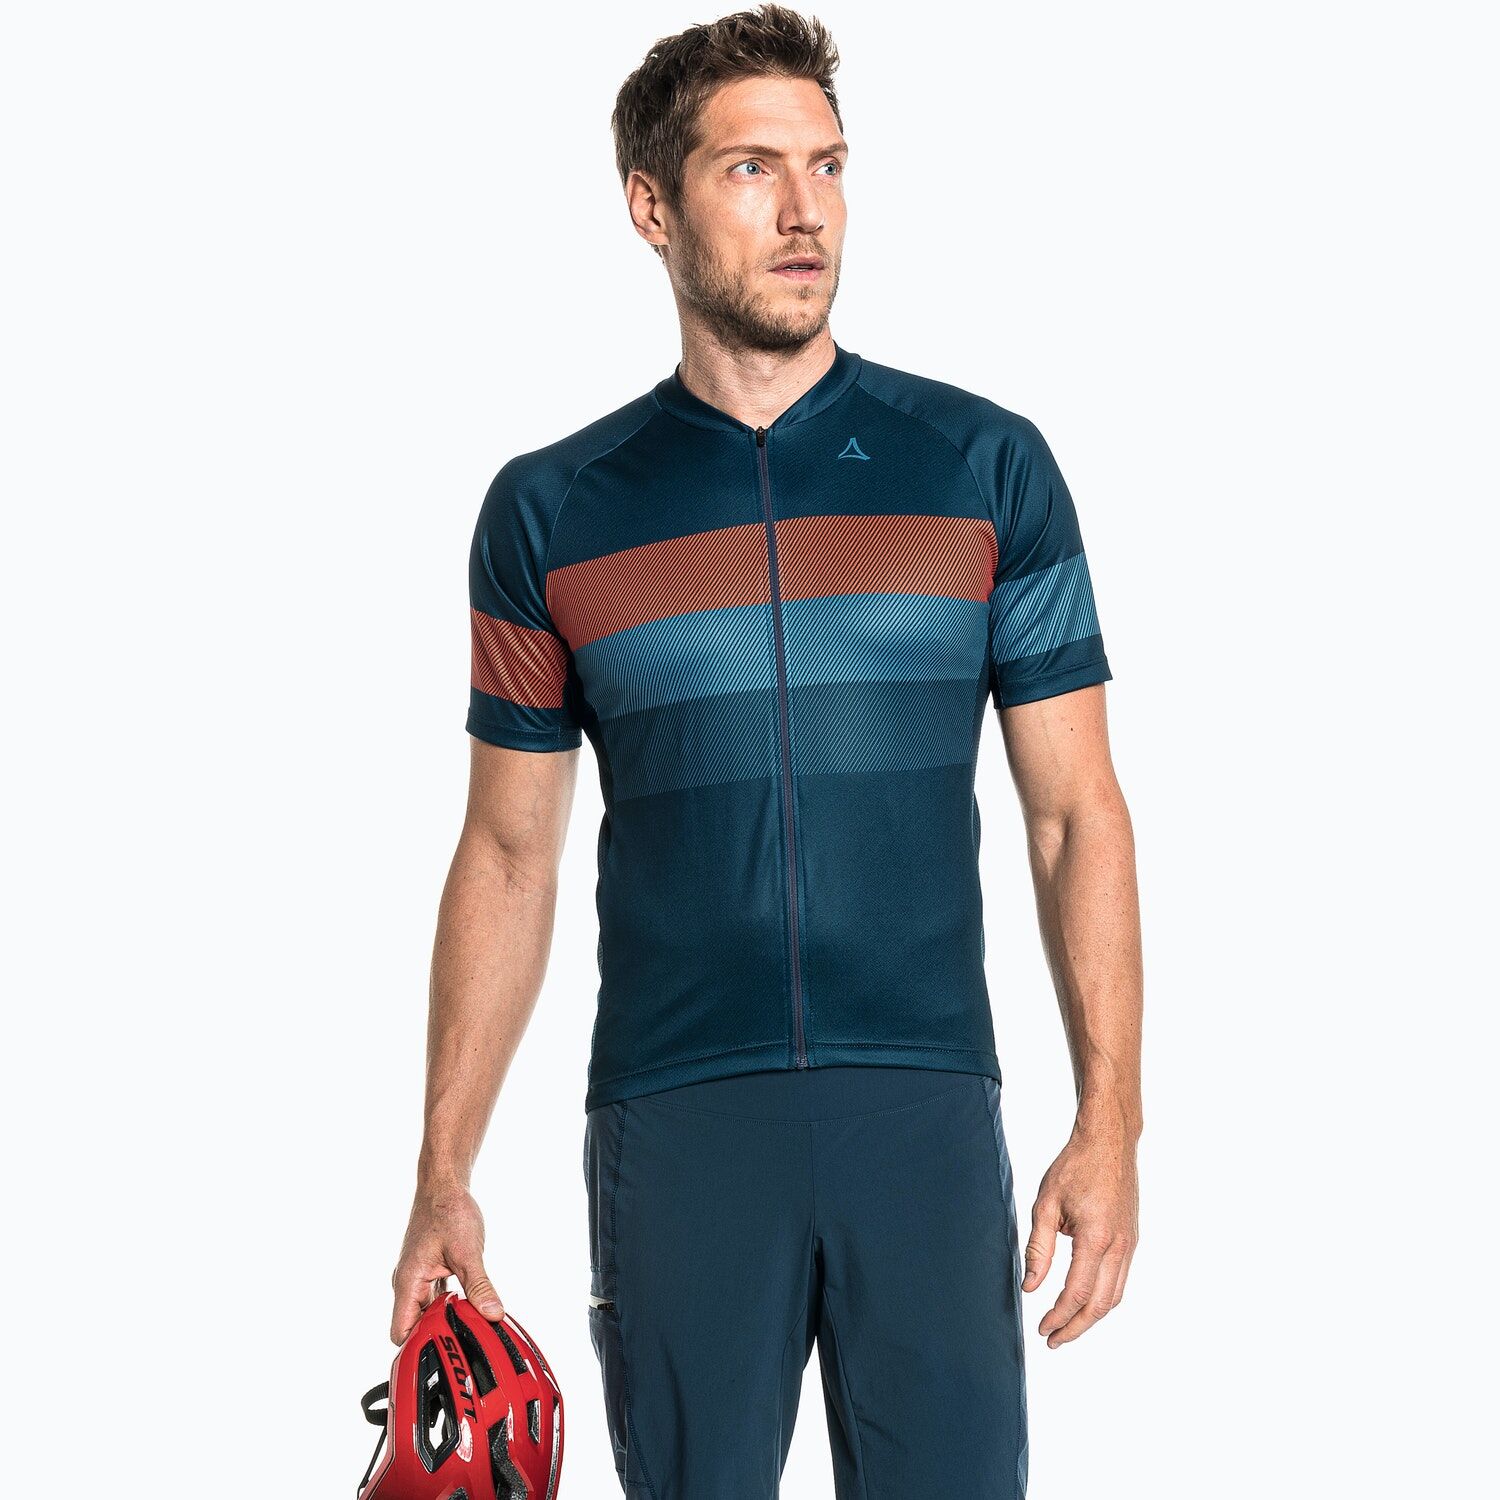 Schöffel Shirt Vertine - Maglia ciclismo - Uomo